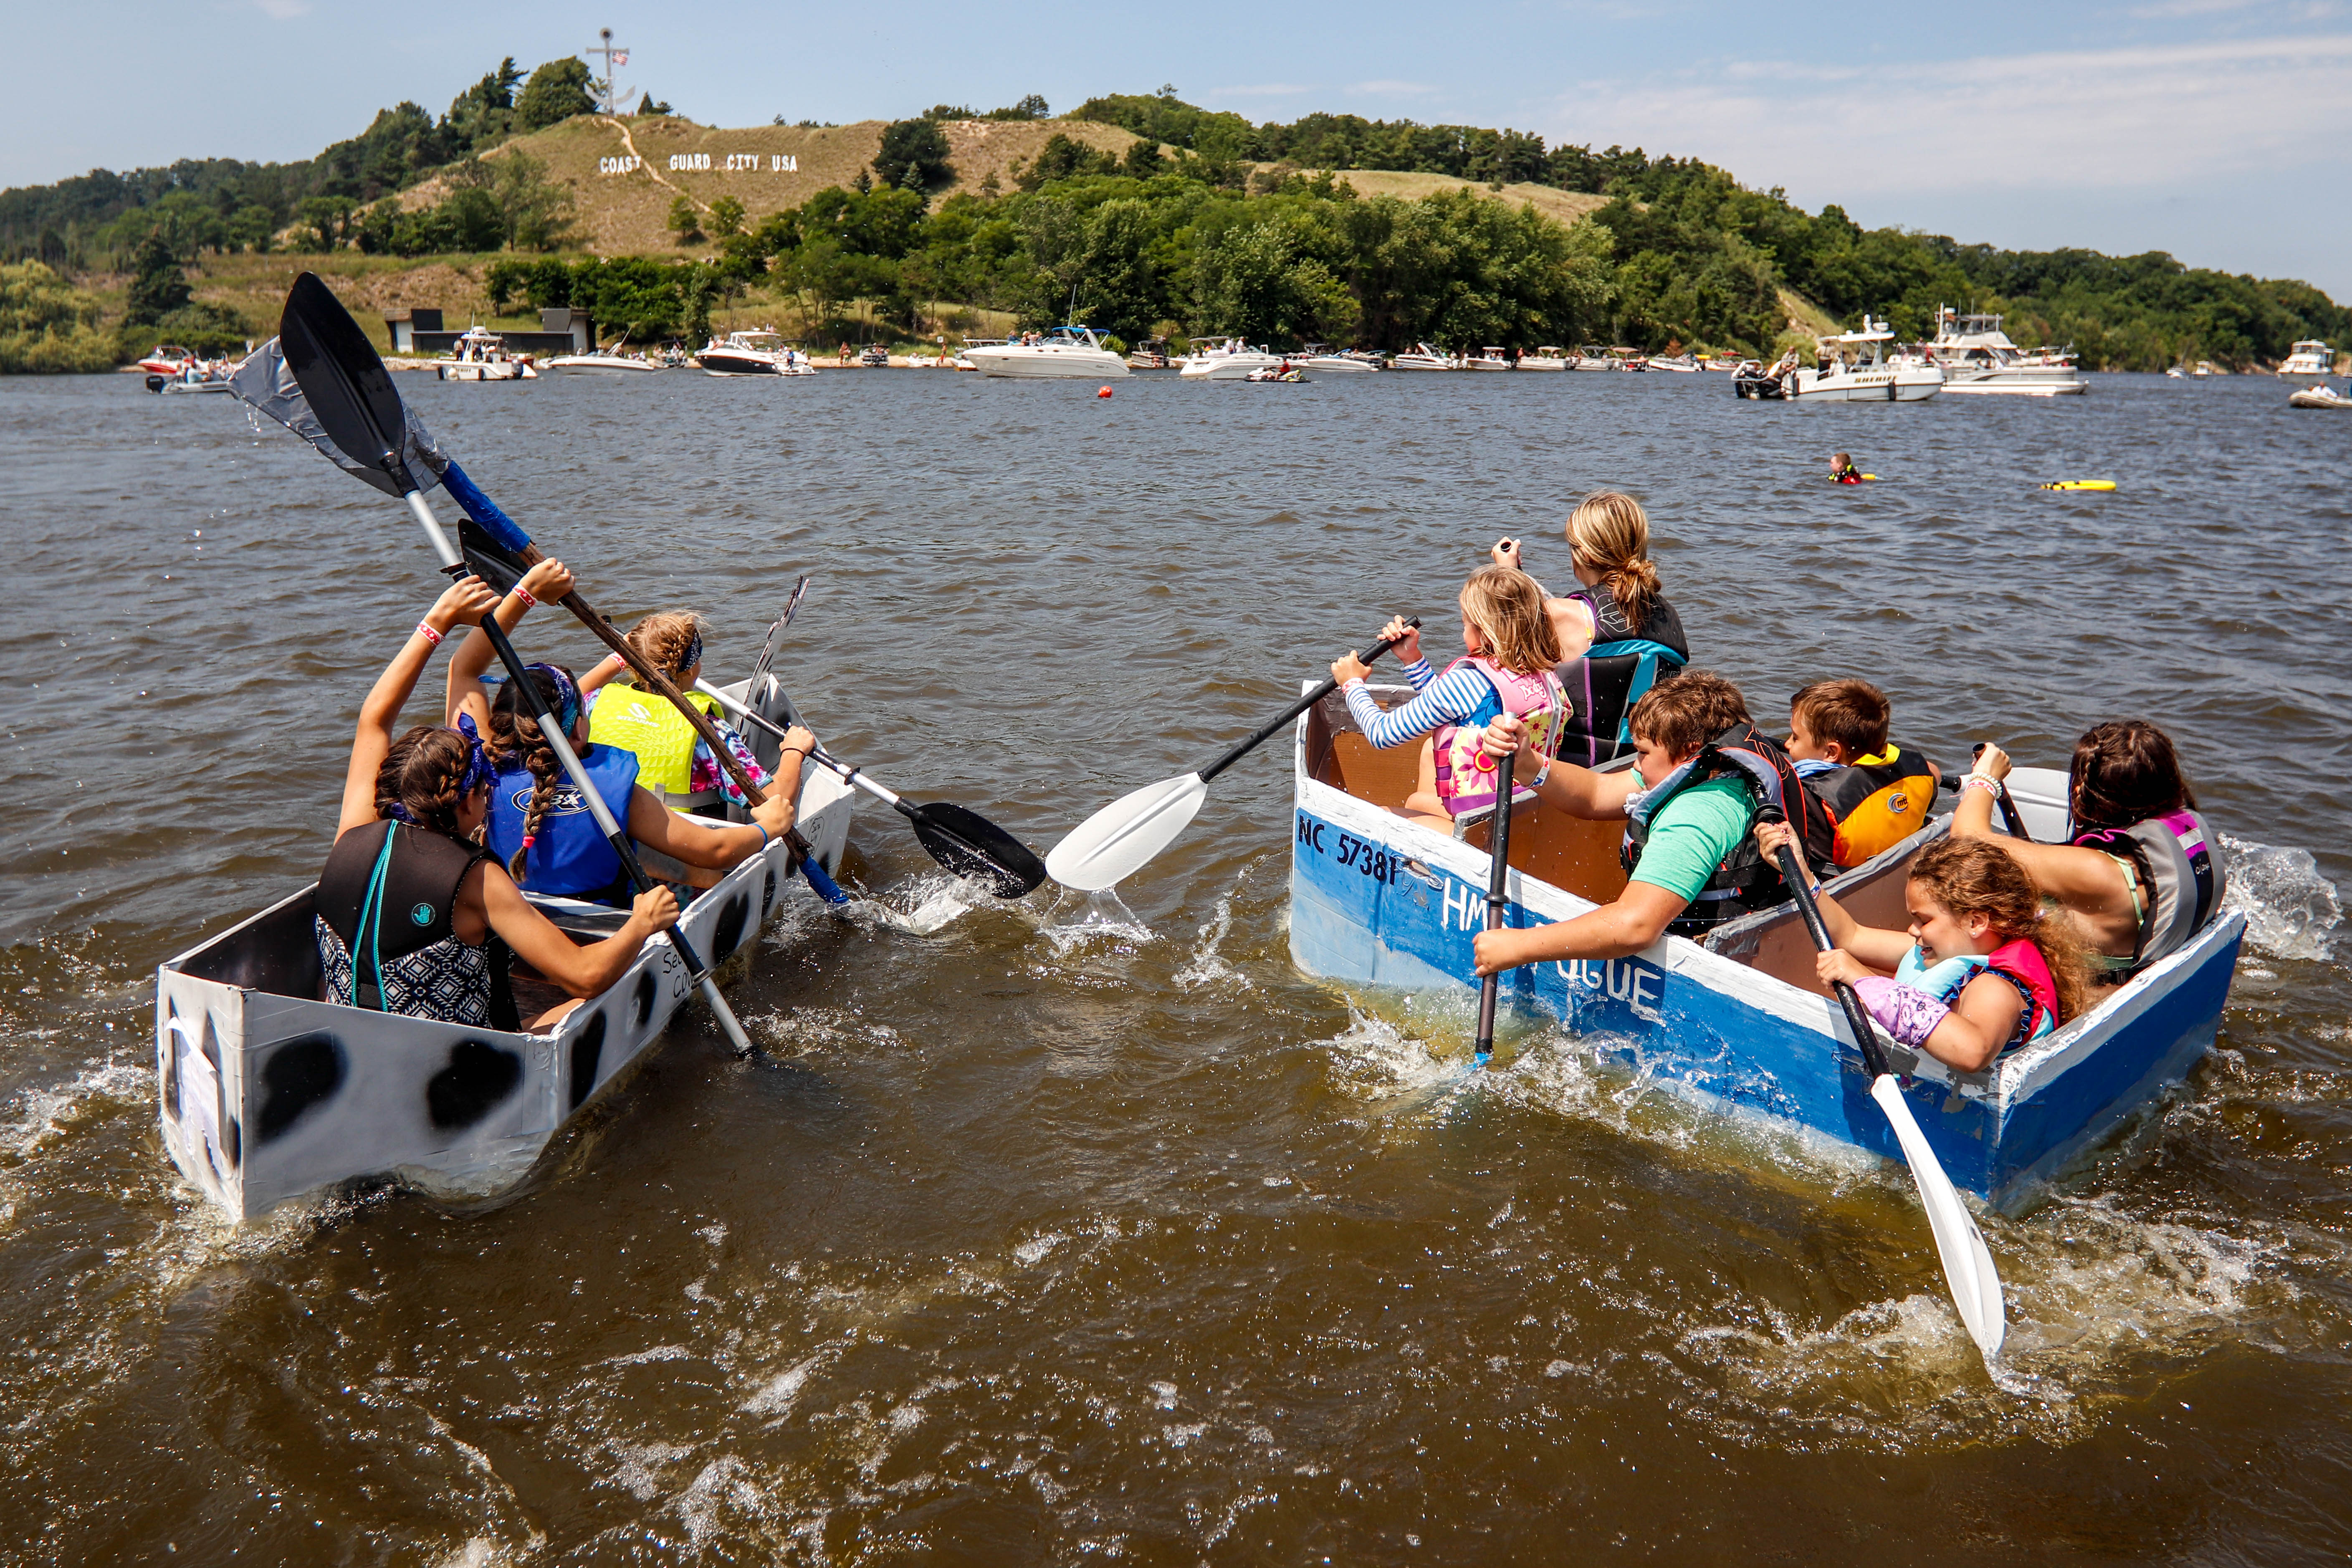 Coast Guard replica boat competing in cardboard boat race